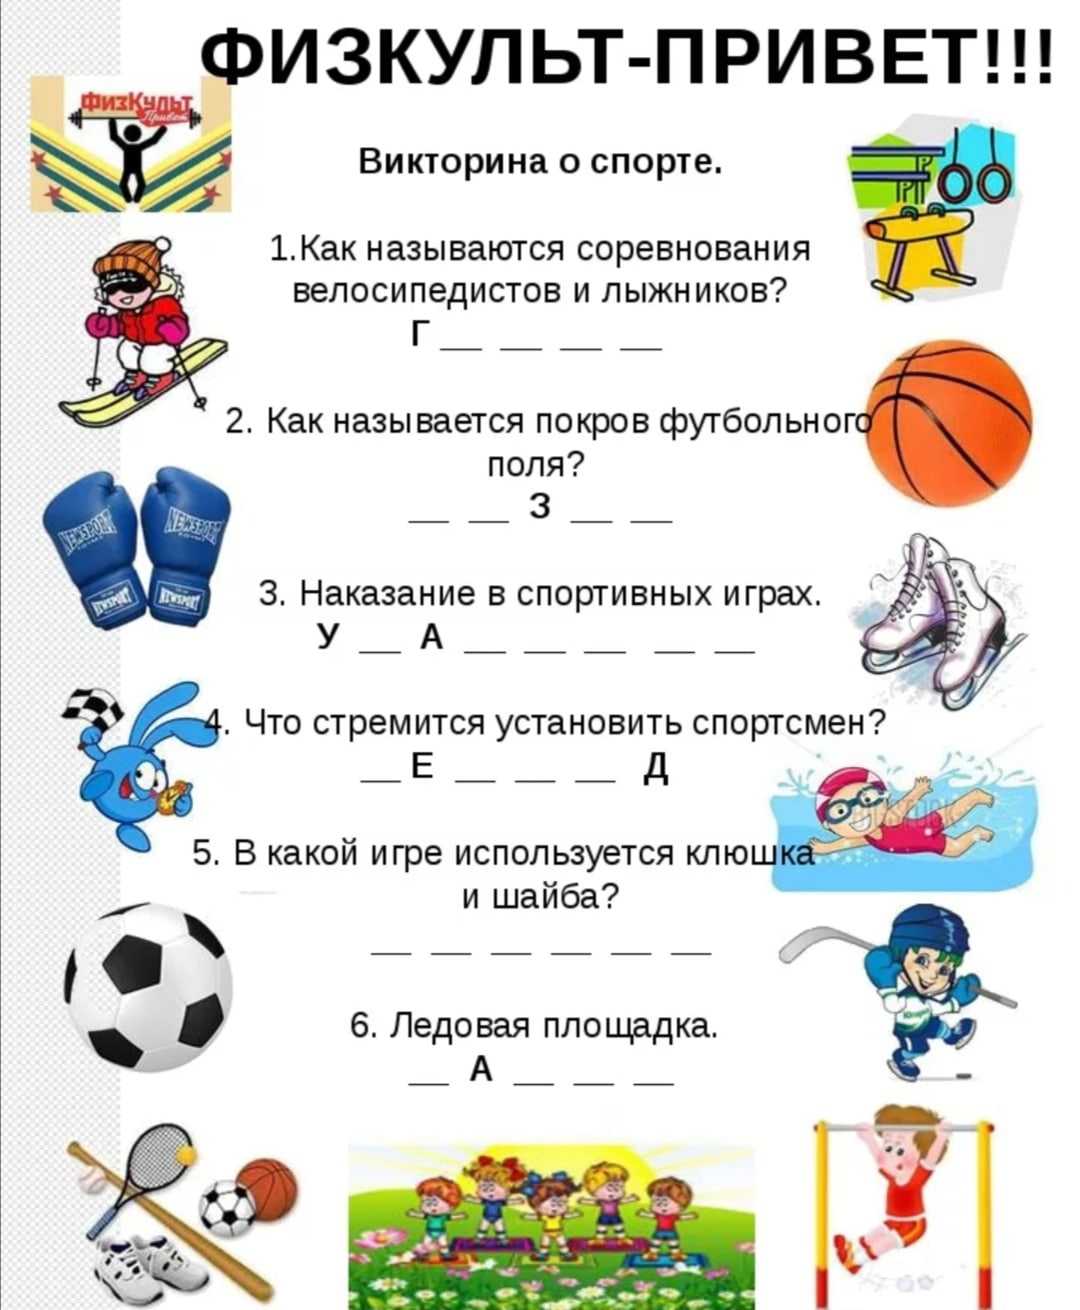 Детям о спорте интересно